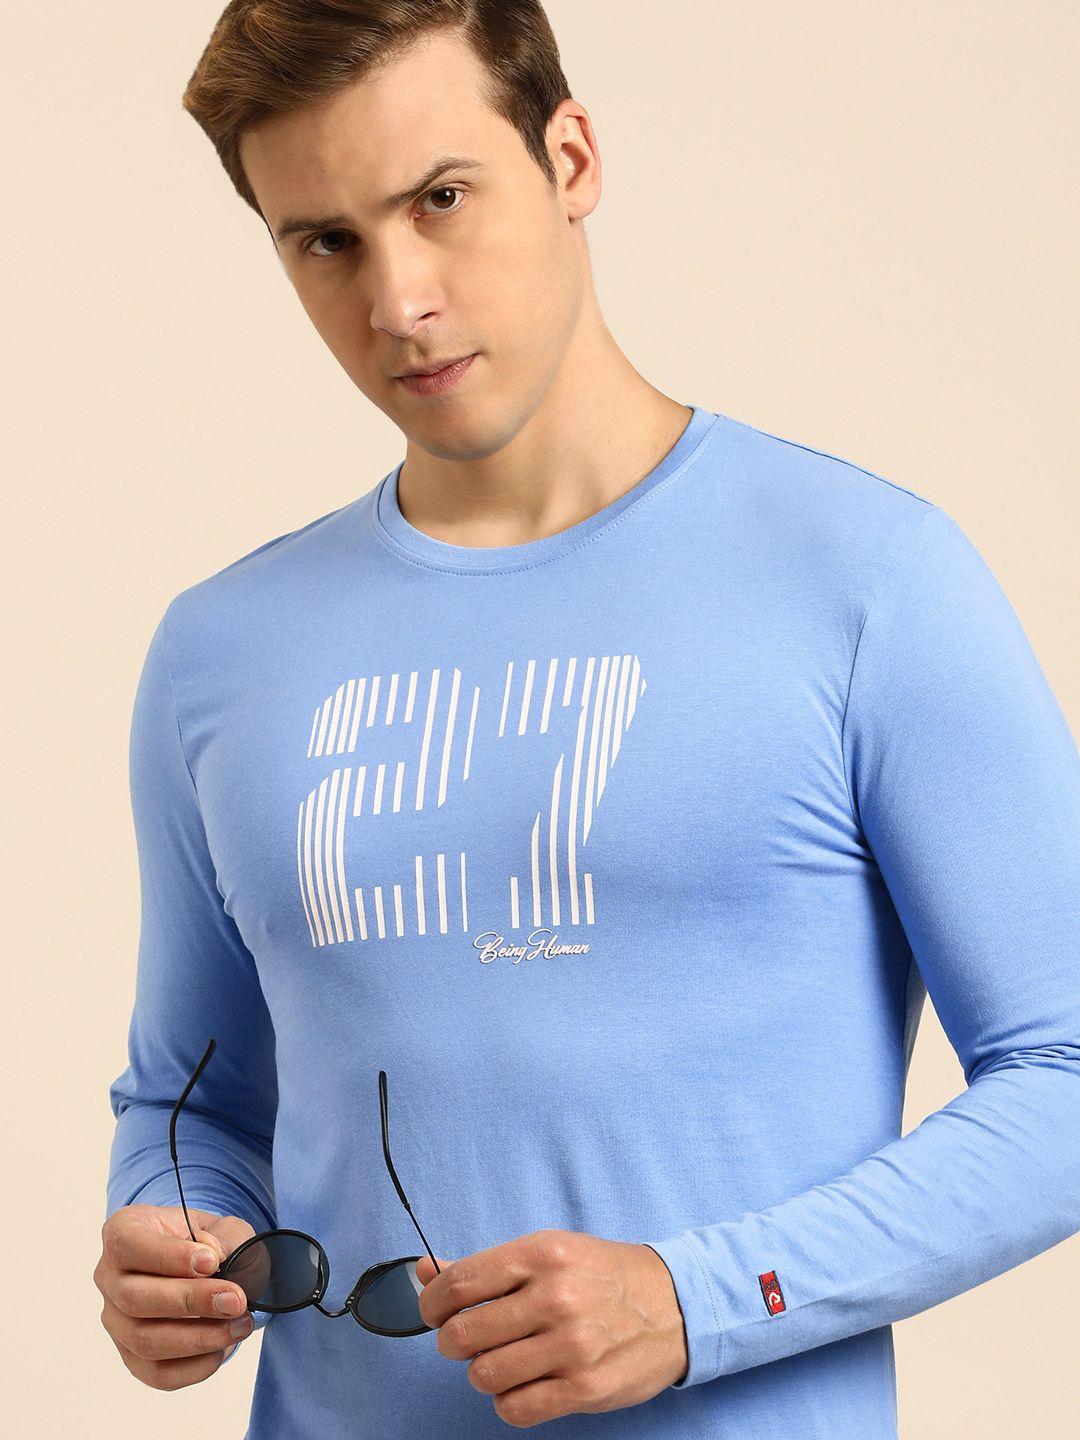 being human brand logo printed pure cotton t-shirt